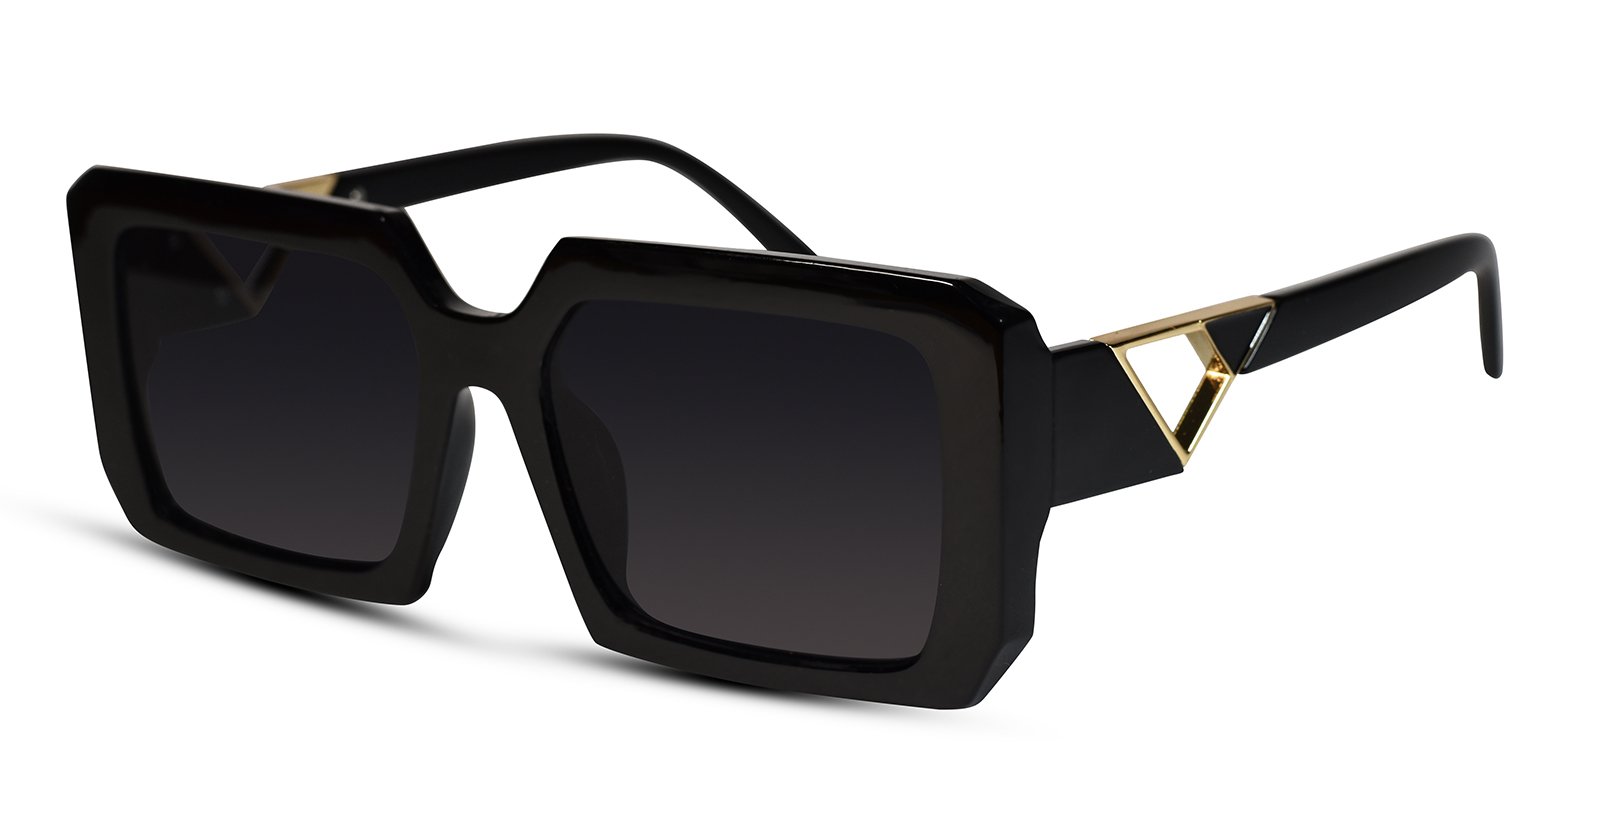 Black Full Rim Rectangular UV Protected Sunglasses